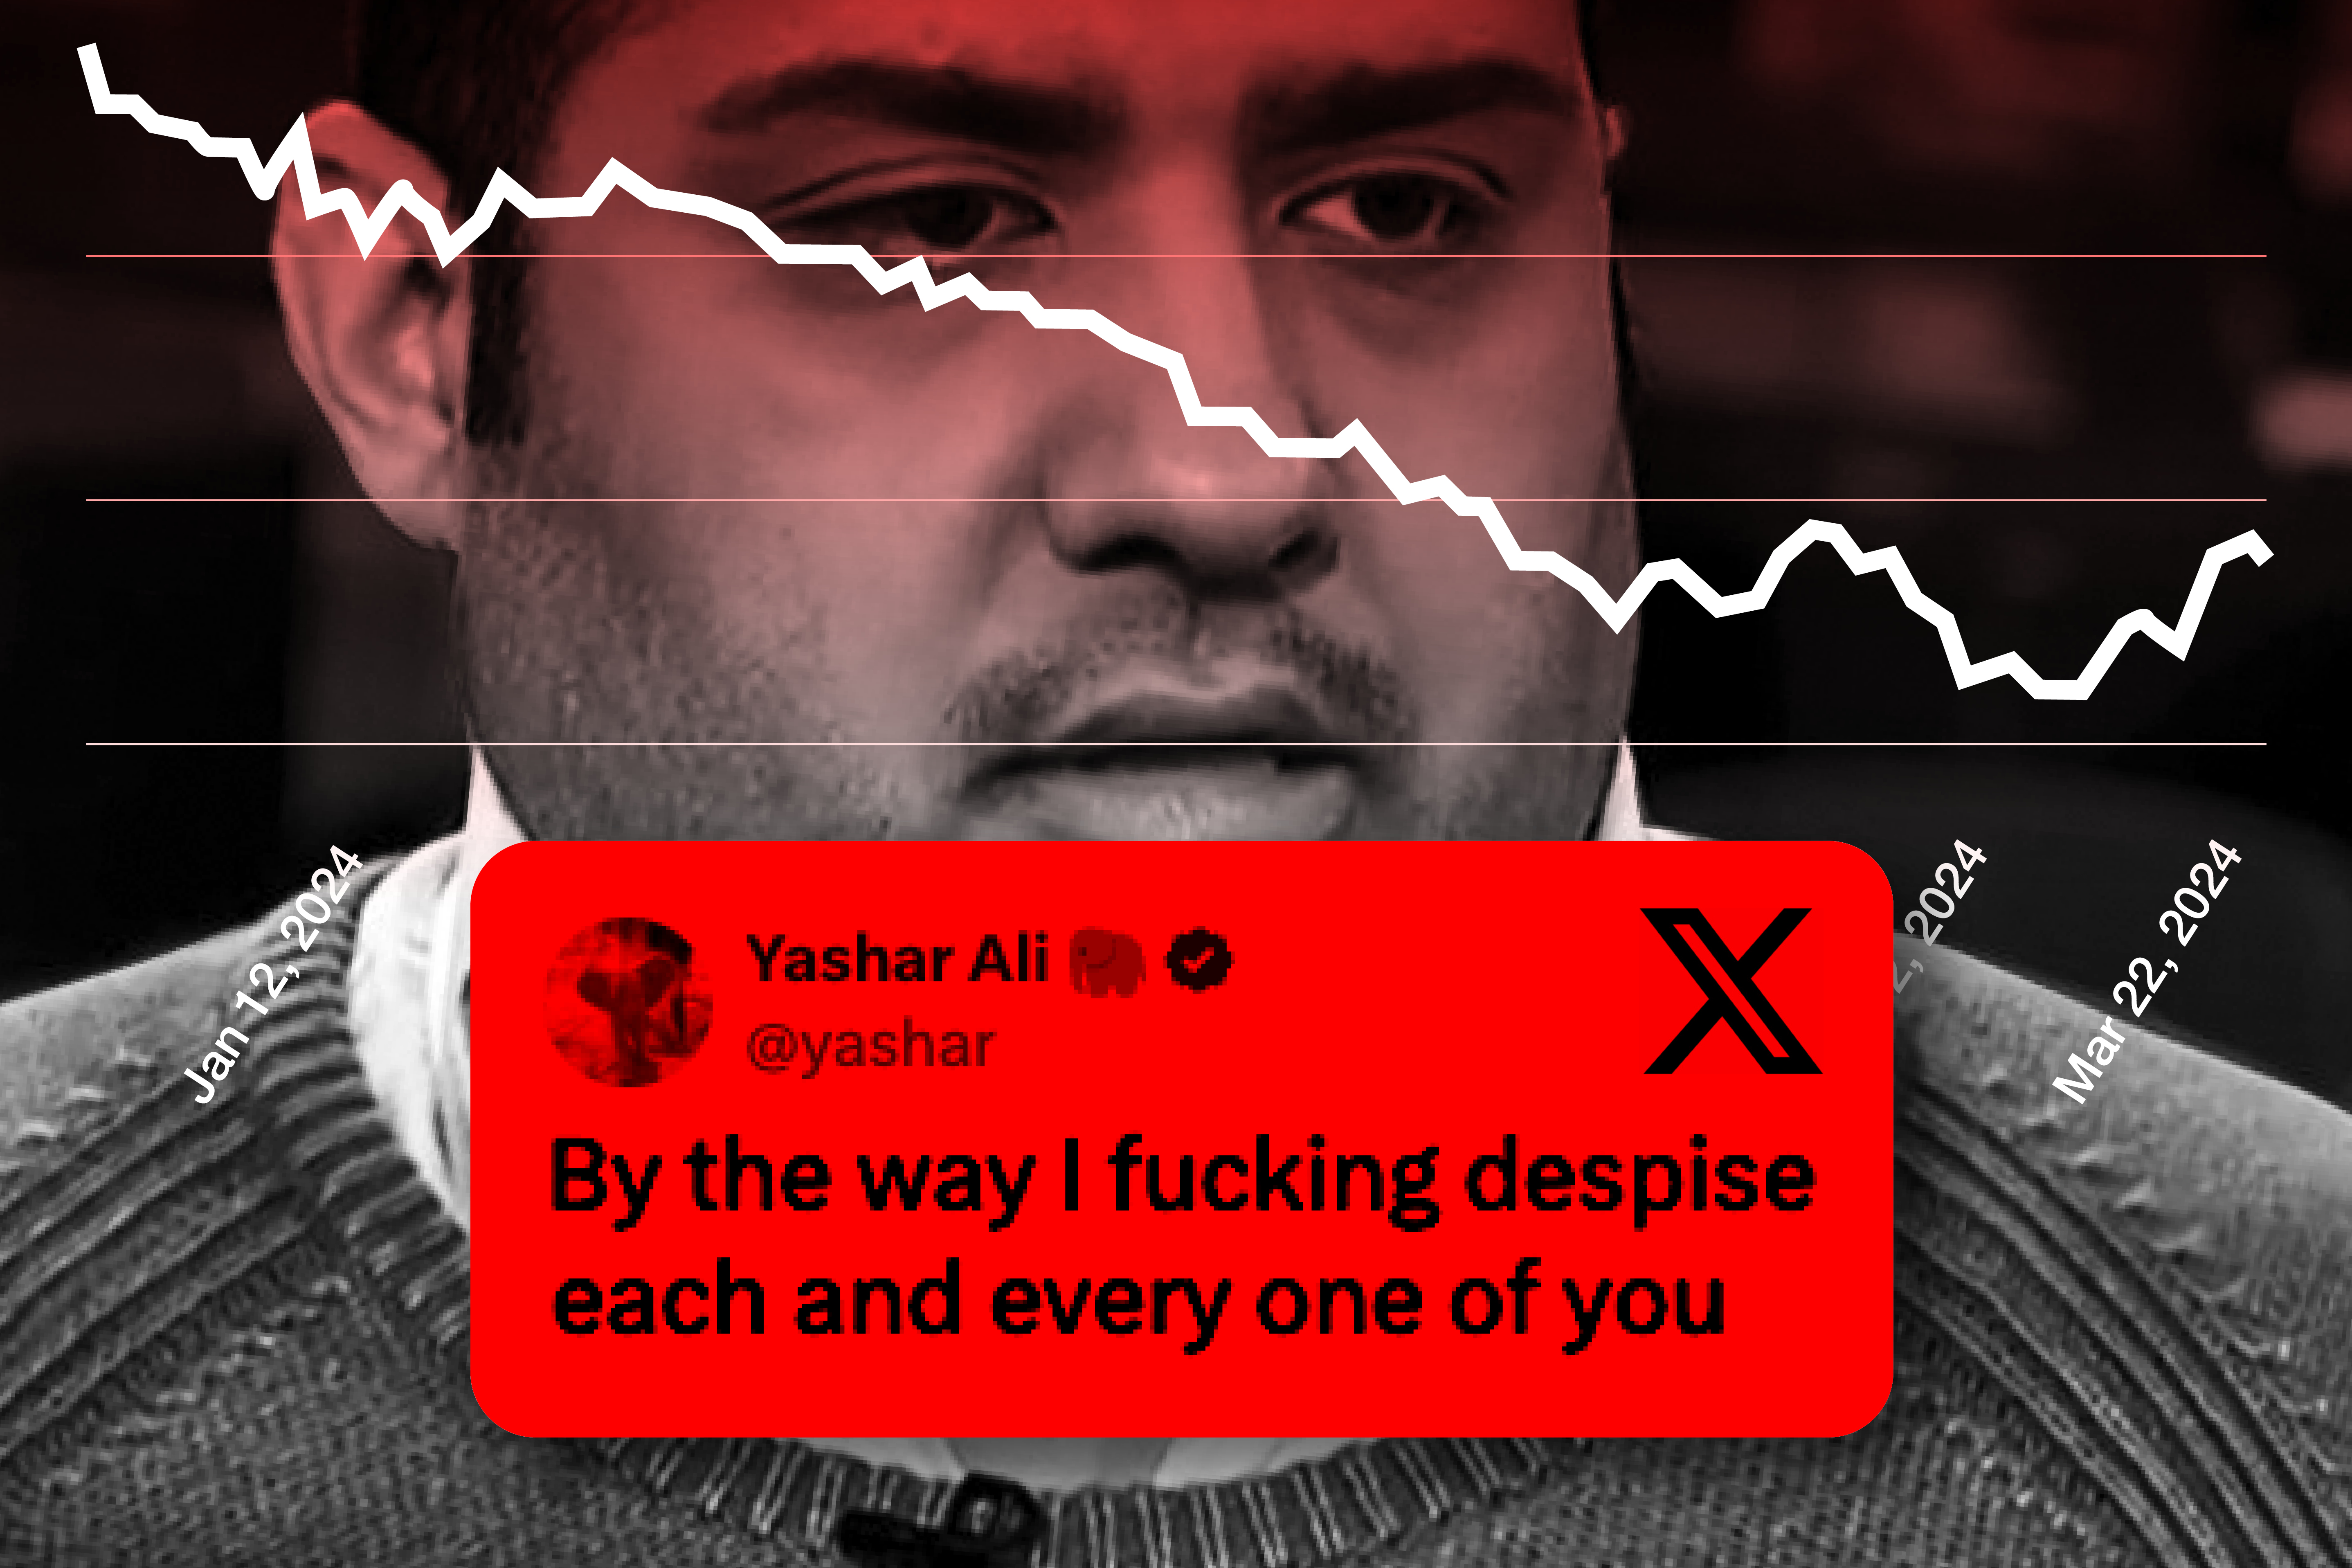 Yashar Ali's subscriber graph